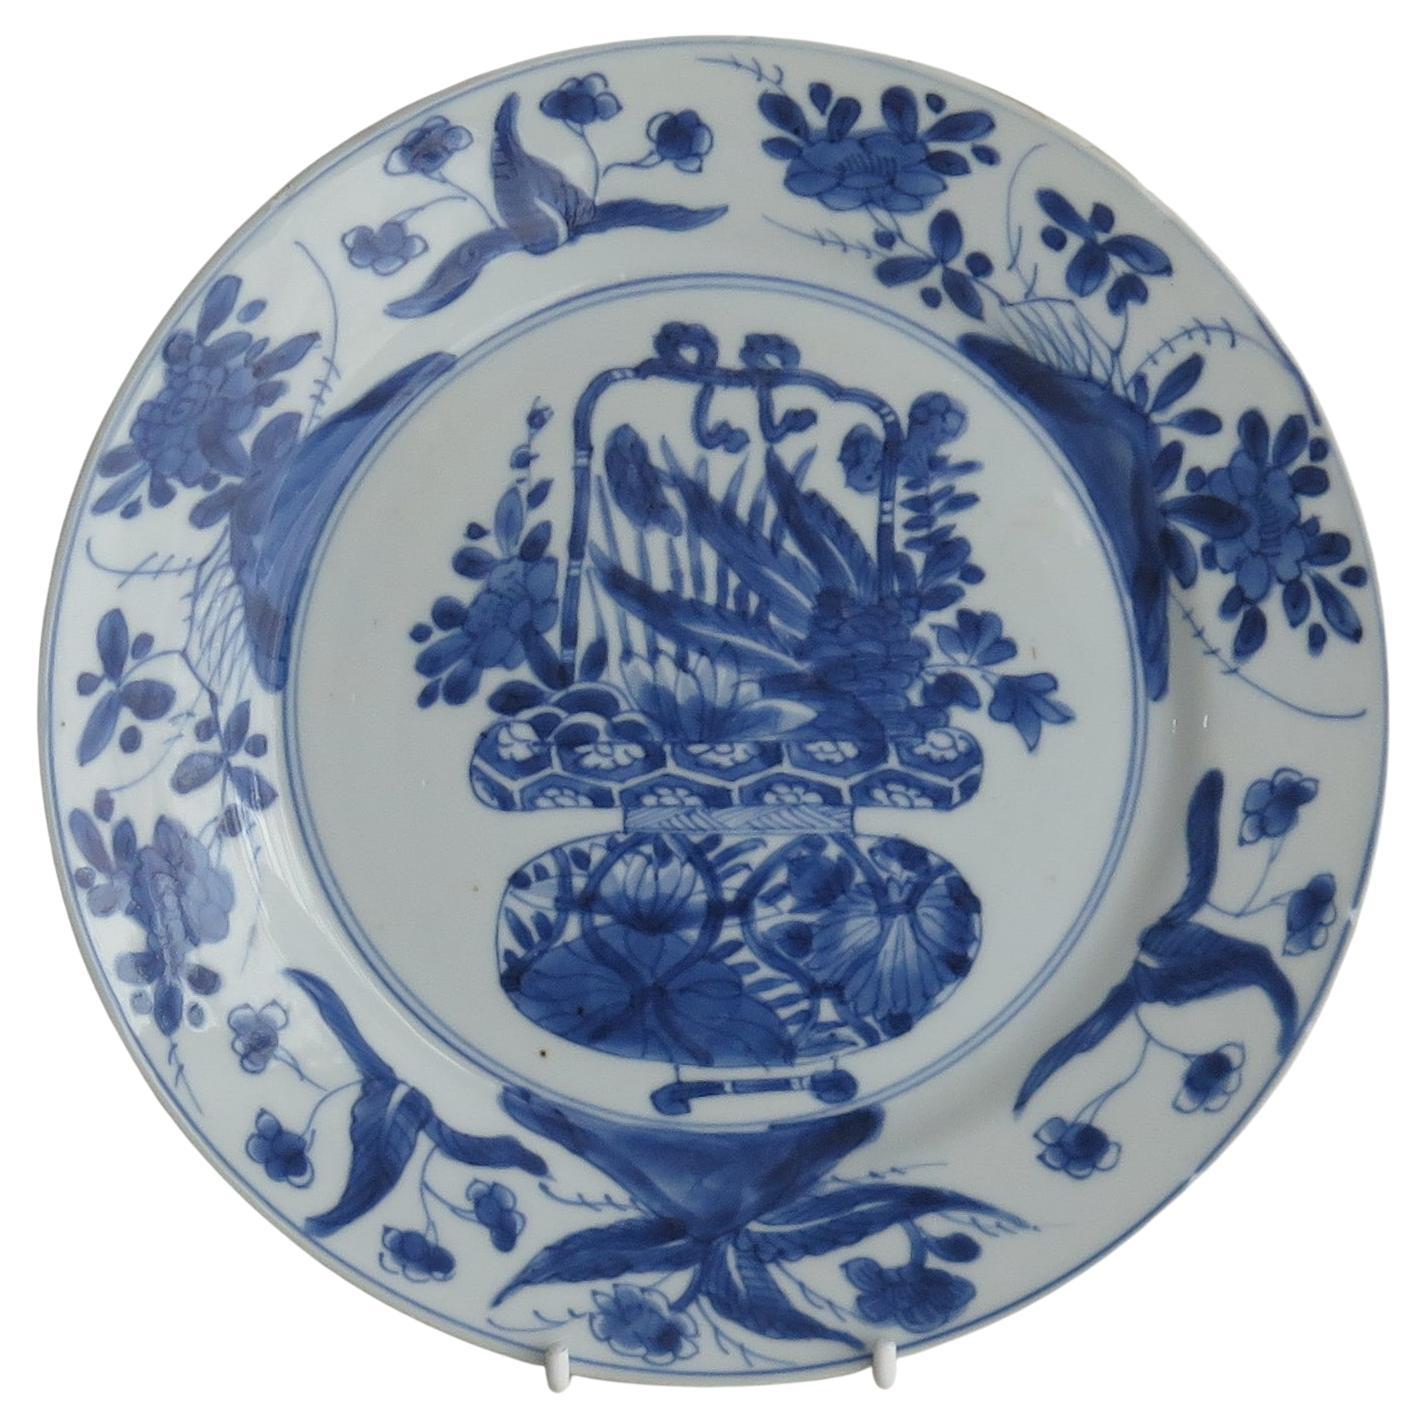 Kangxi marked Chinese Plate Porcelain Blue & White flower basket, Circa 1700